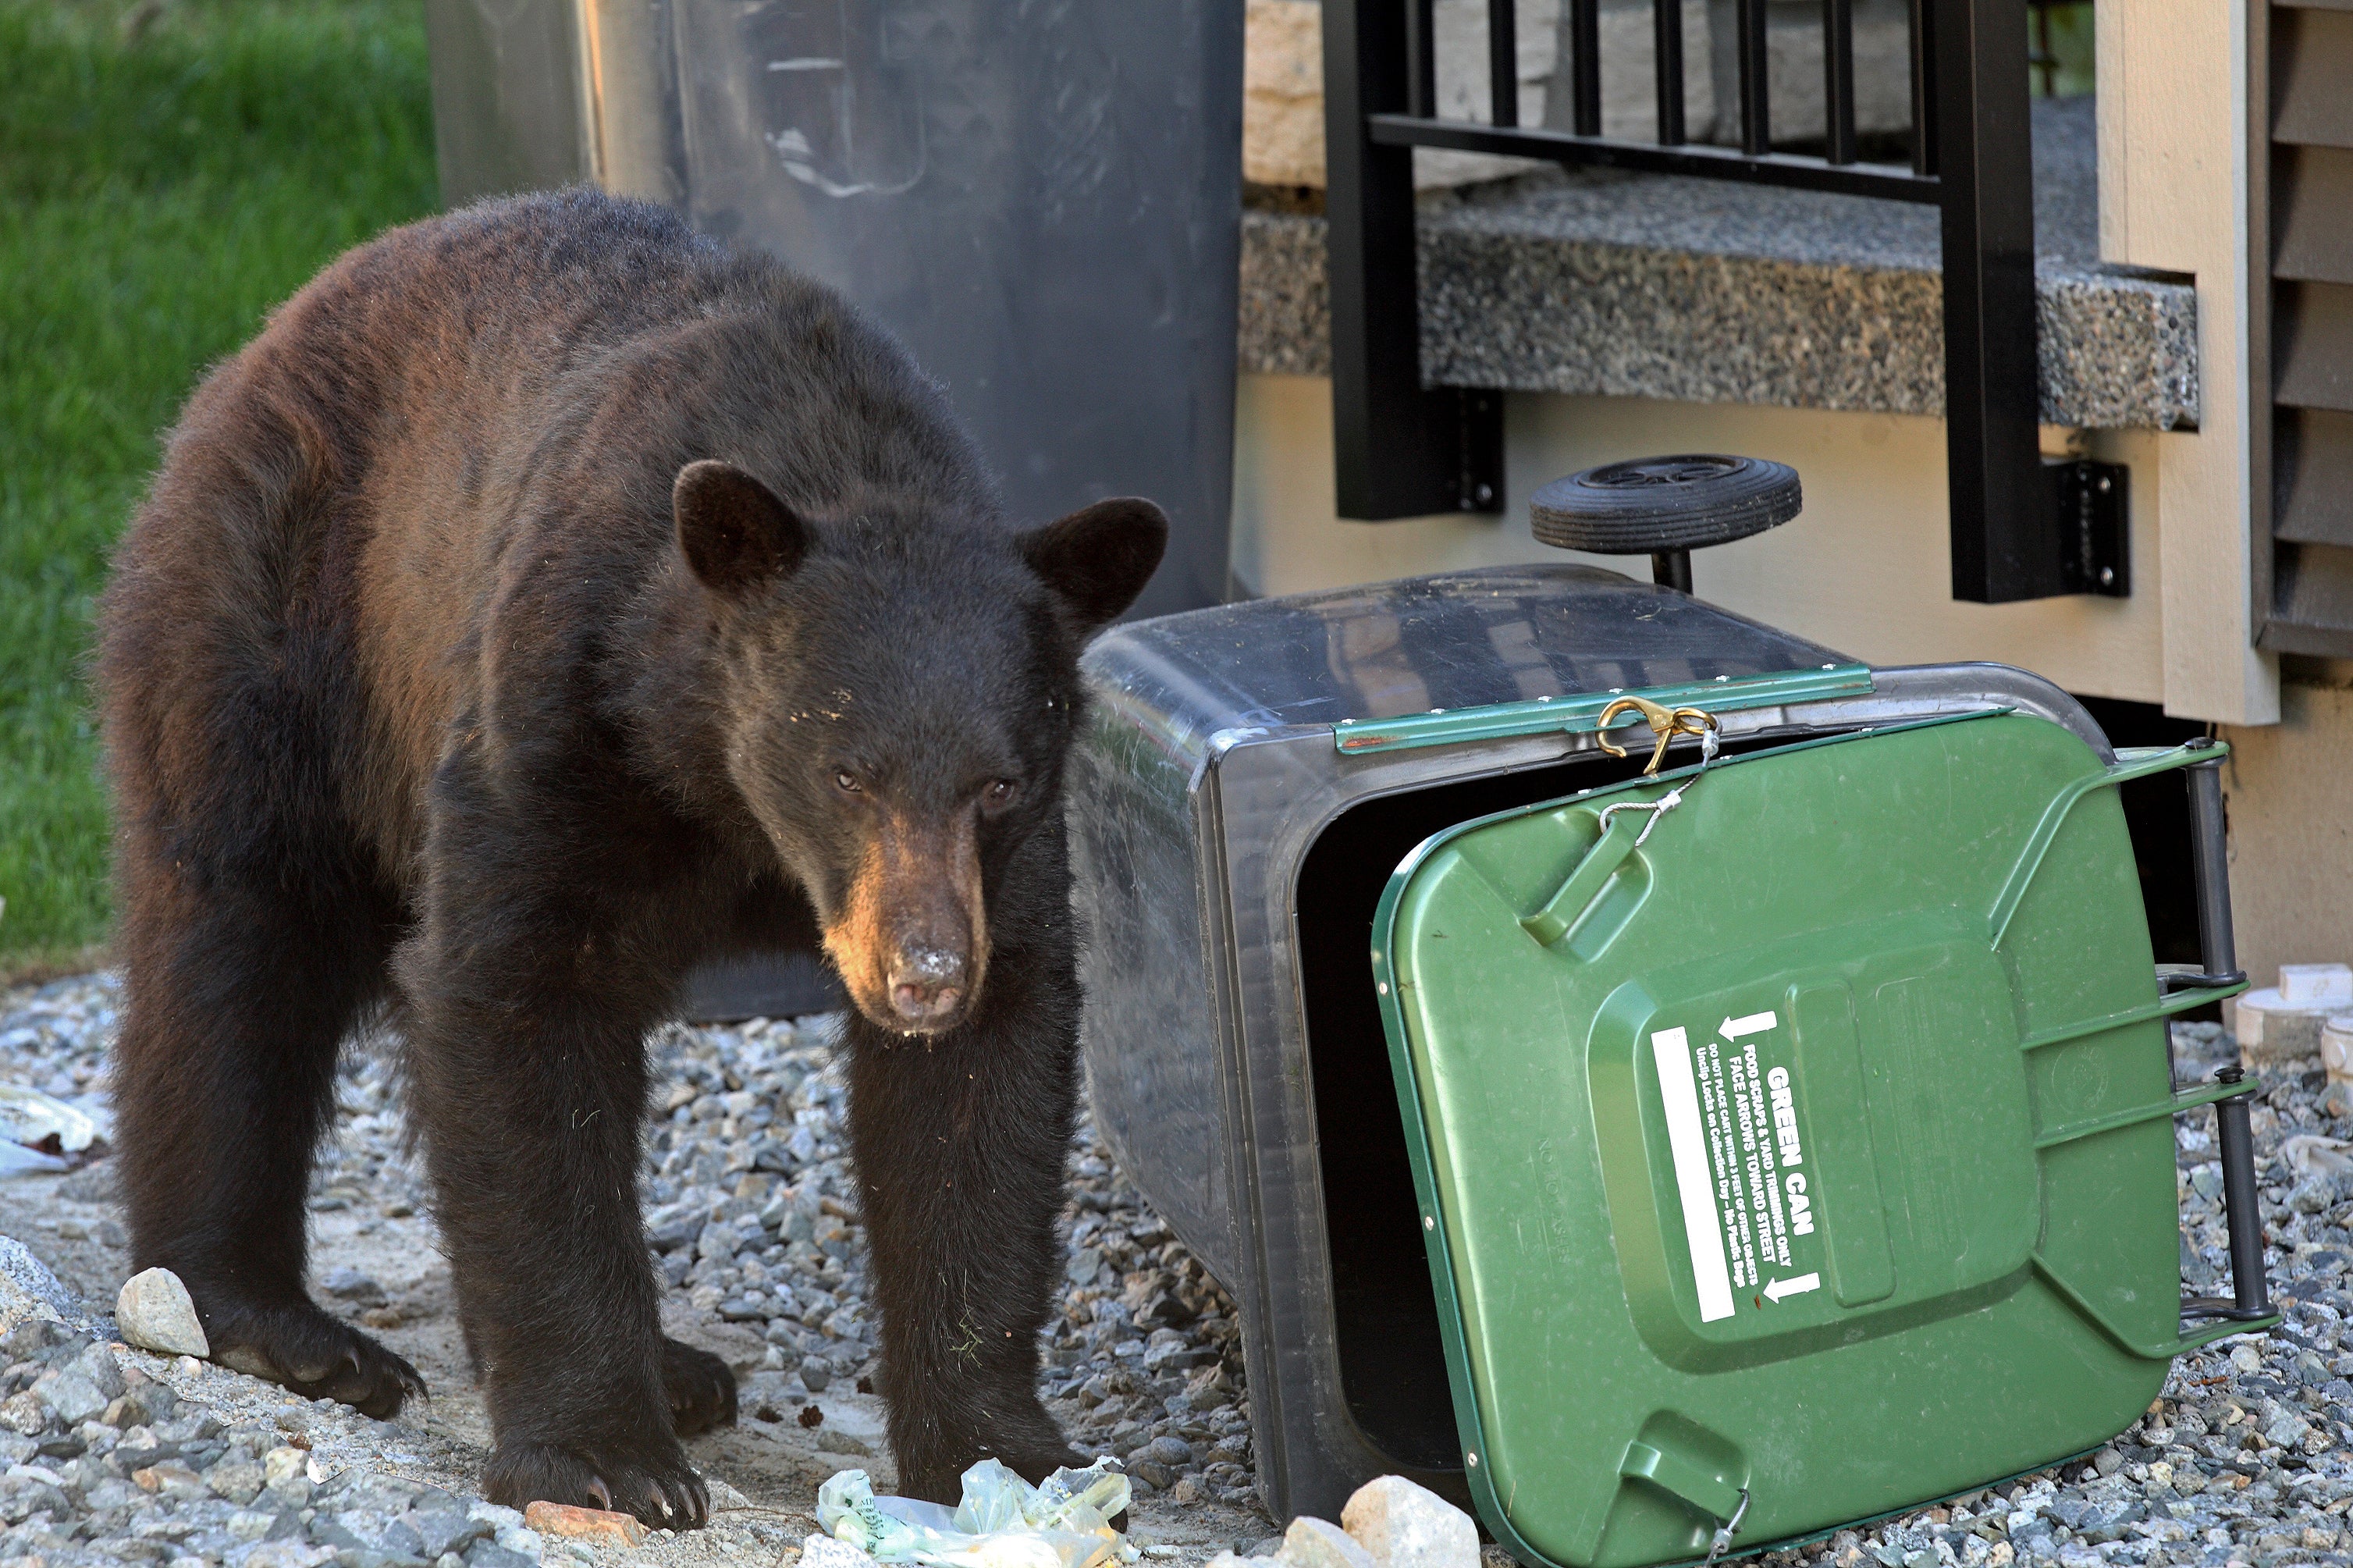 Black Bear getting into trash